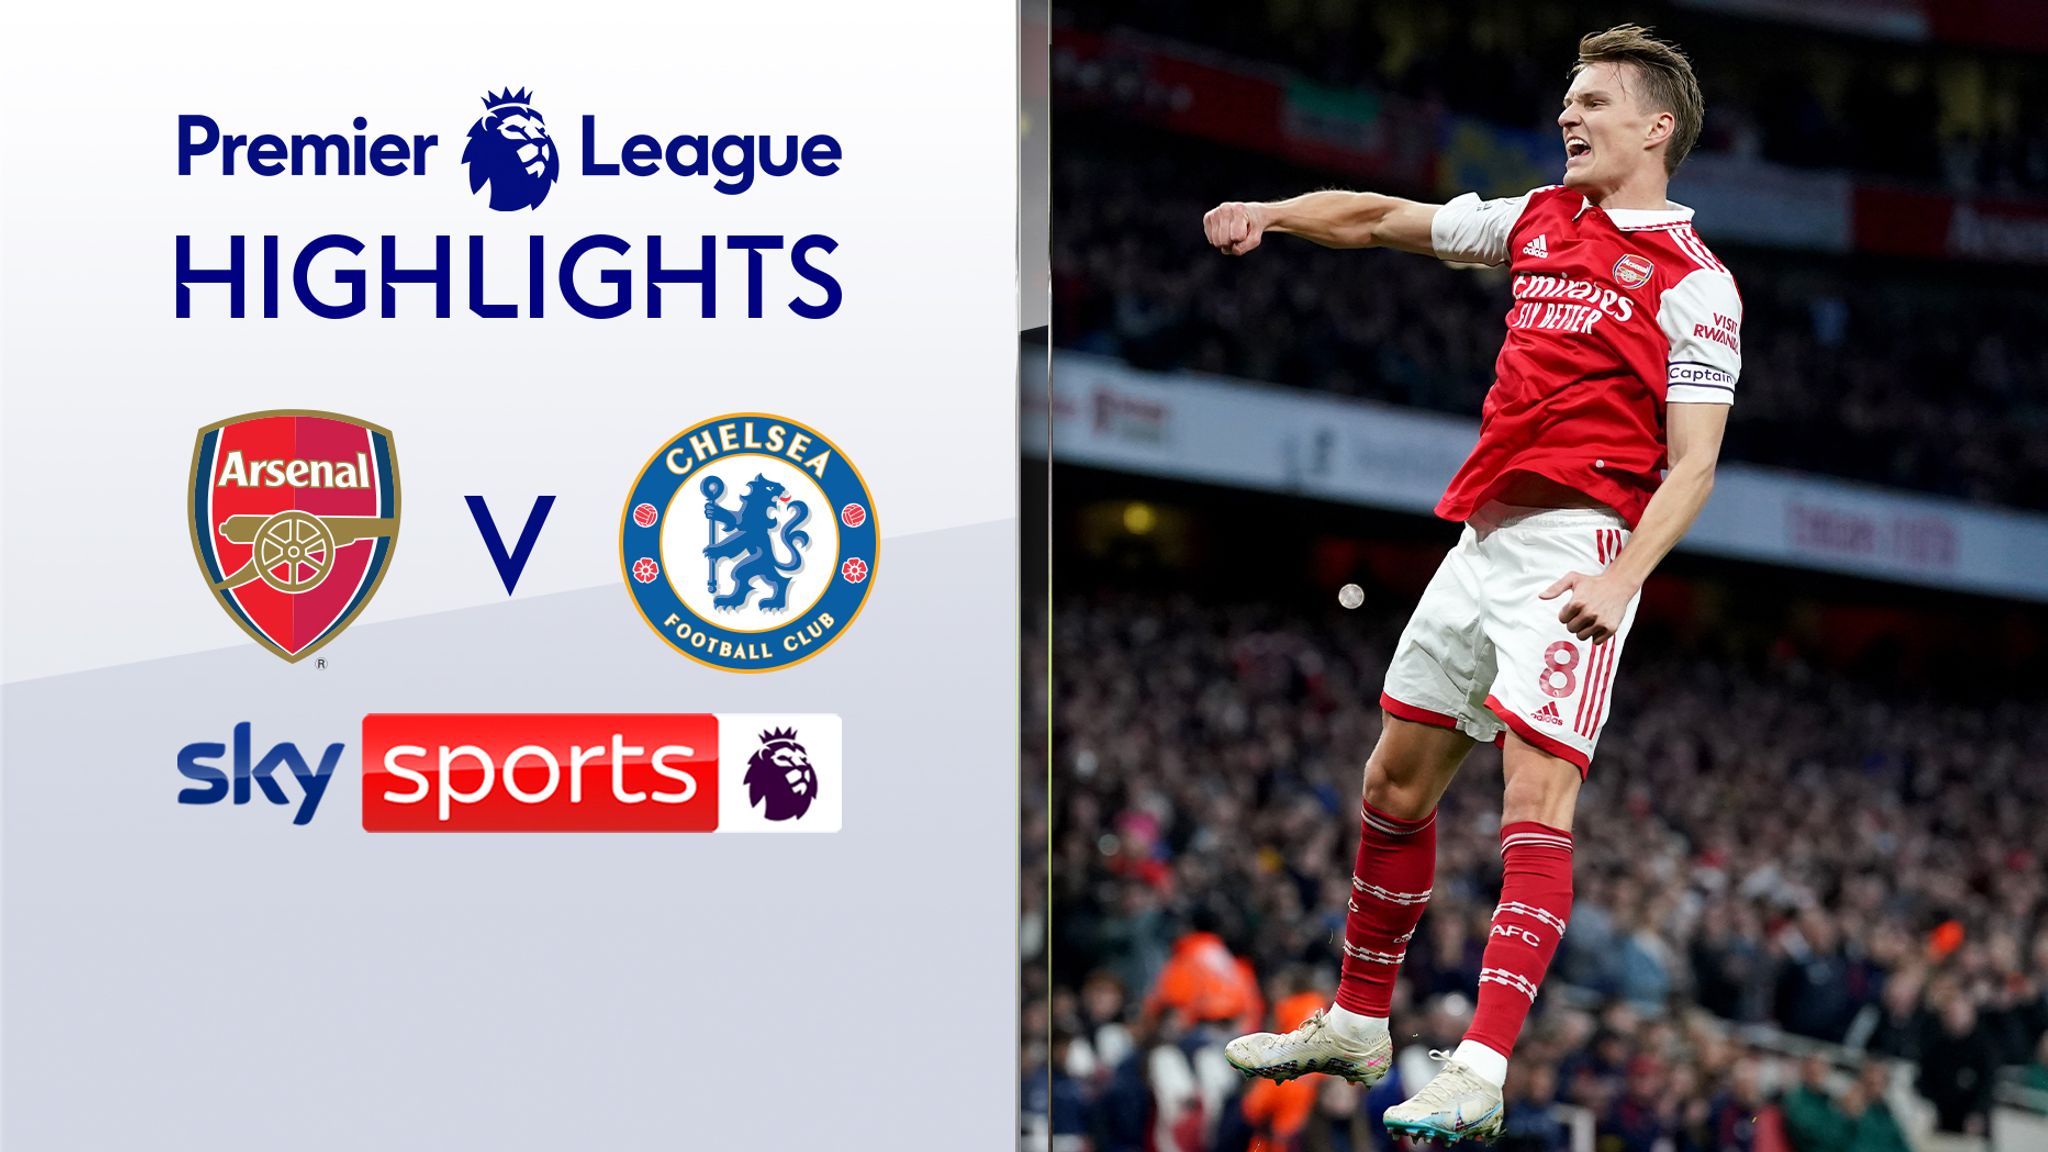 Arsenal 3-1 Chelsea Premier League highlights Video Watch TV Show Sky Sports